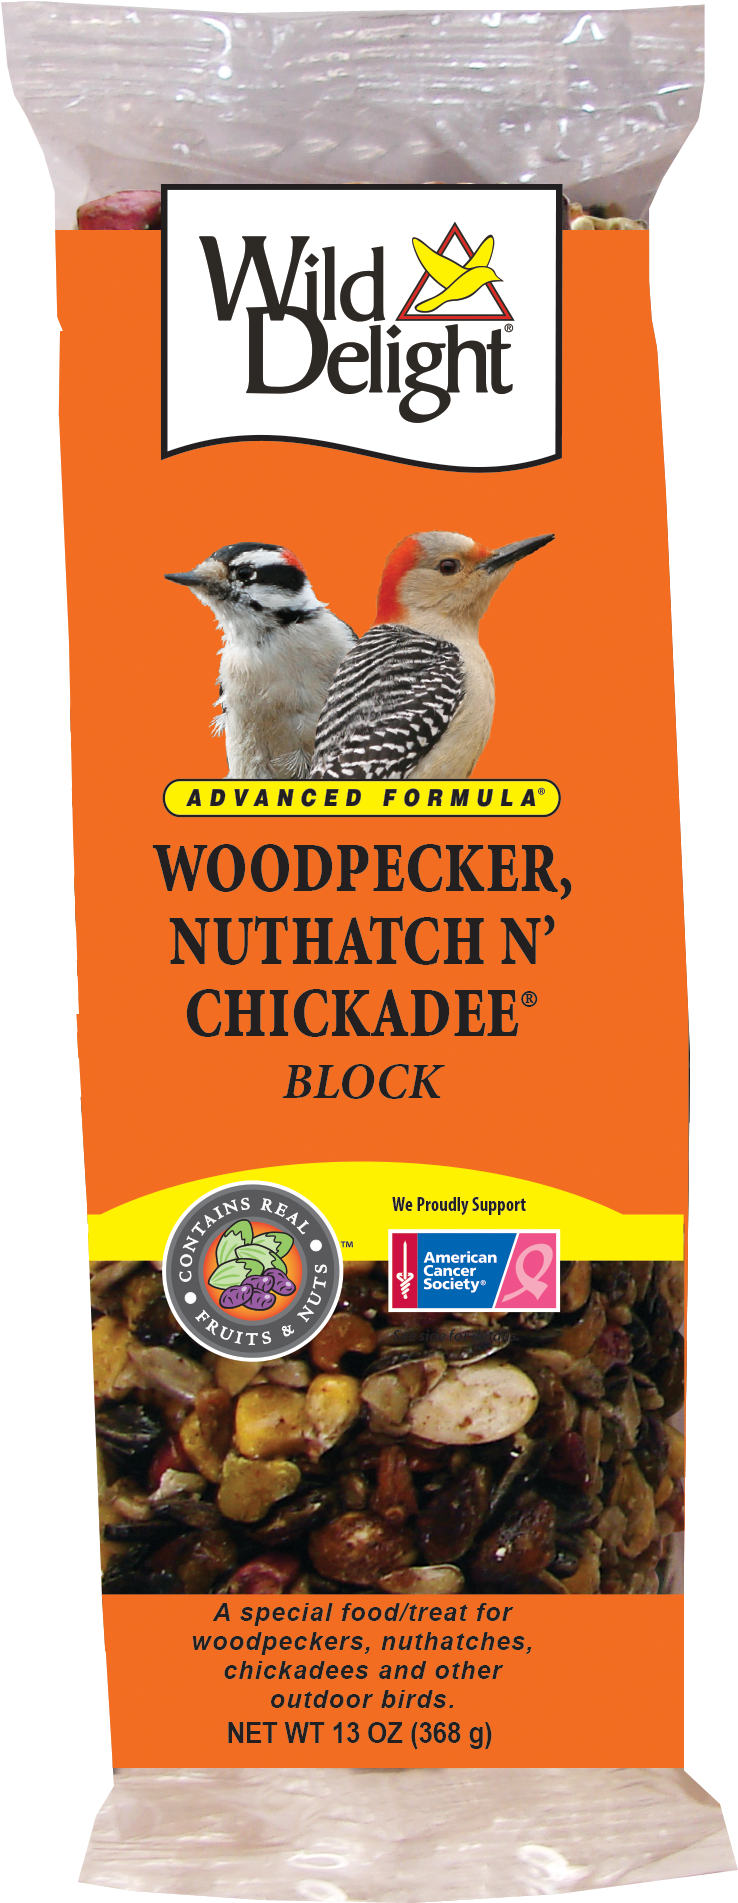 Wild Delight Woodpecker Block Packaging PNG